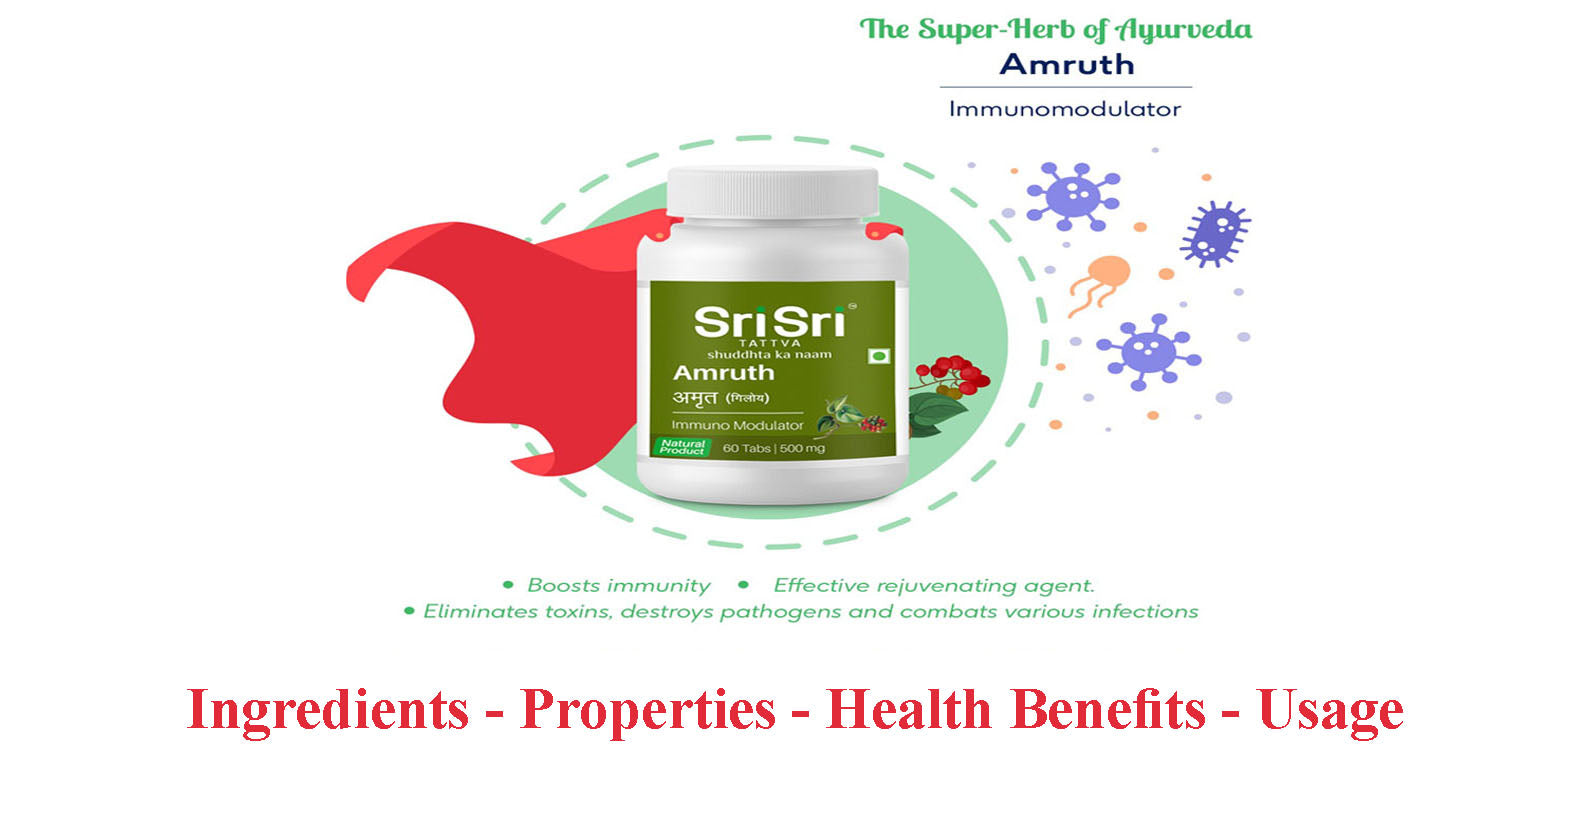 Sri Sri Tattva Amruth - Ingredients, Properties, Health Benefits, Usage